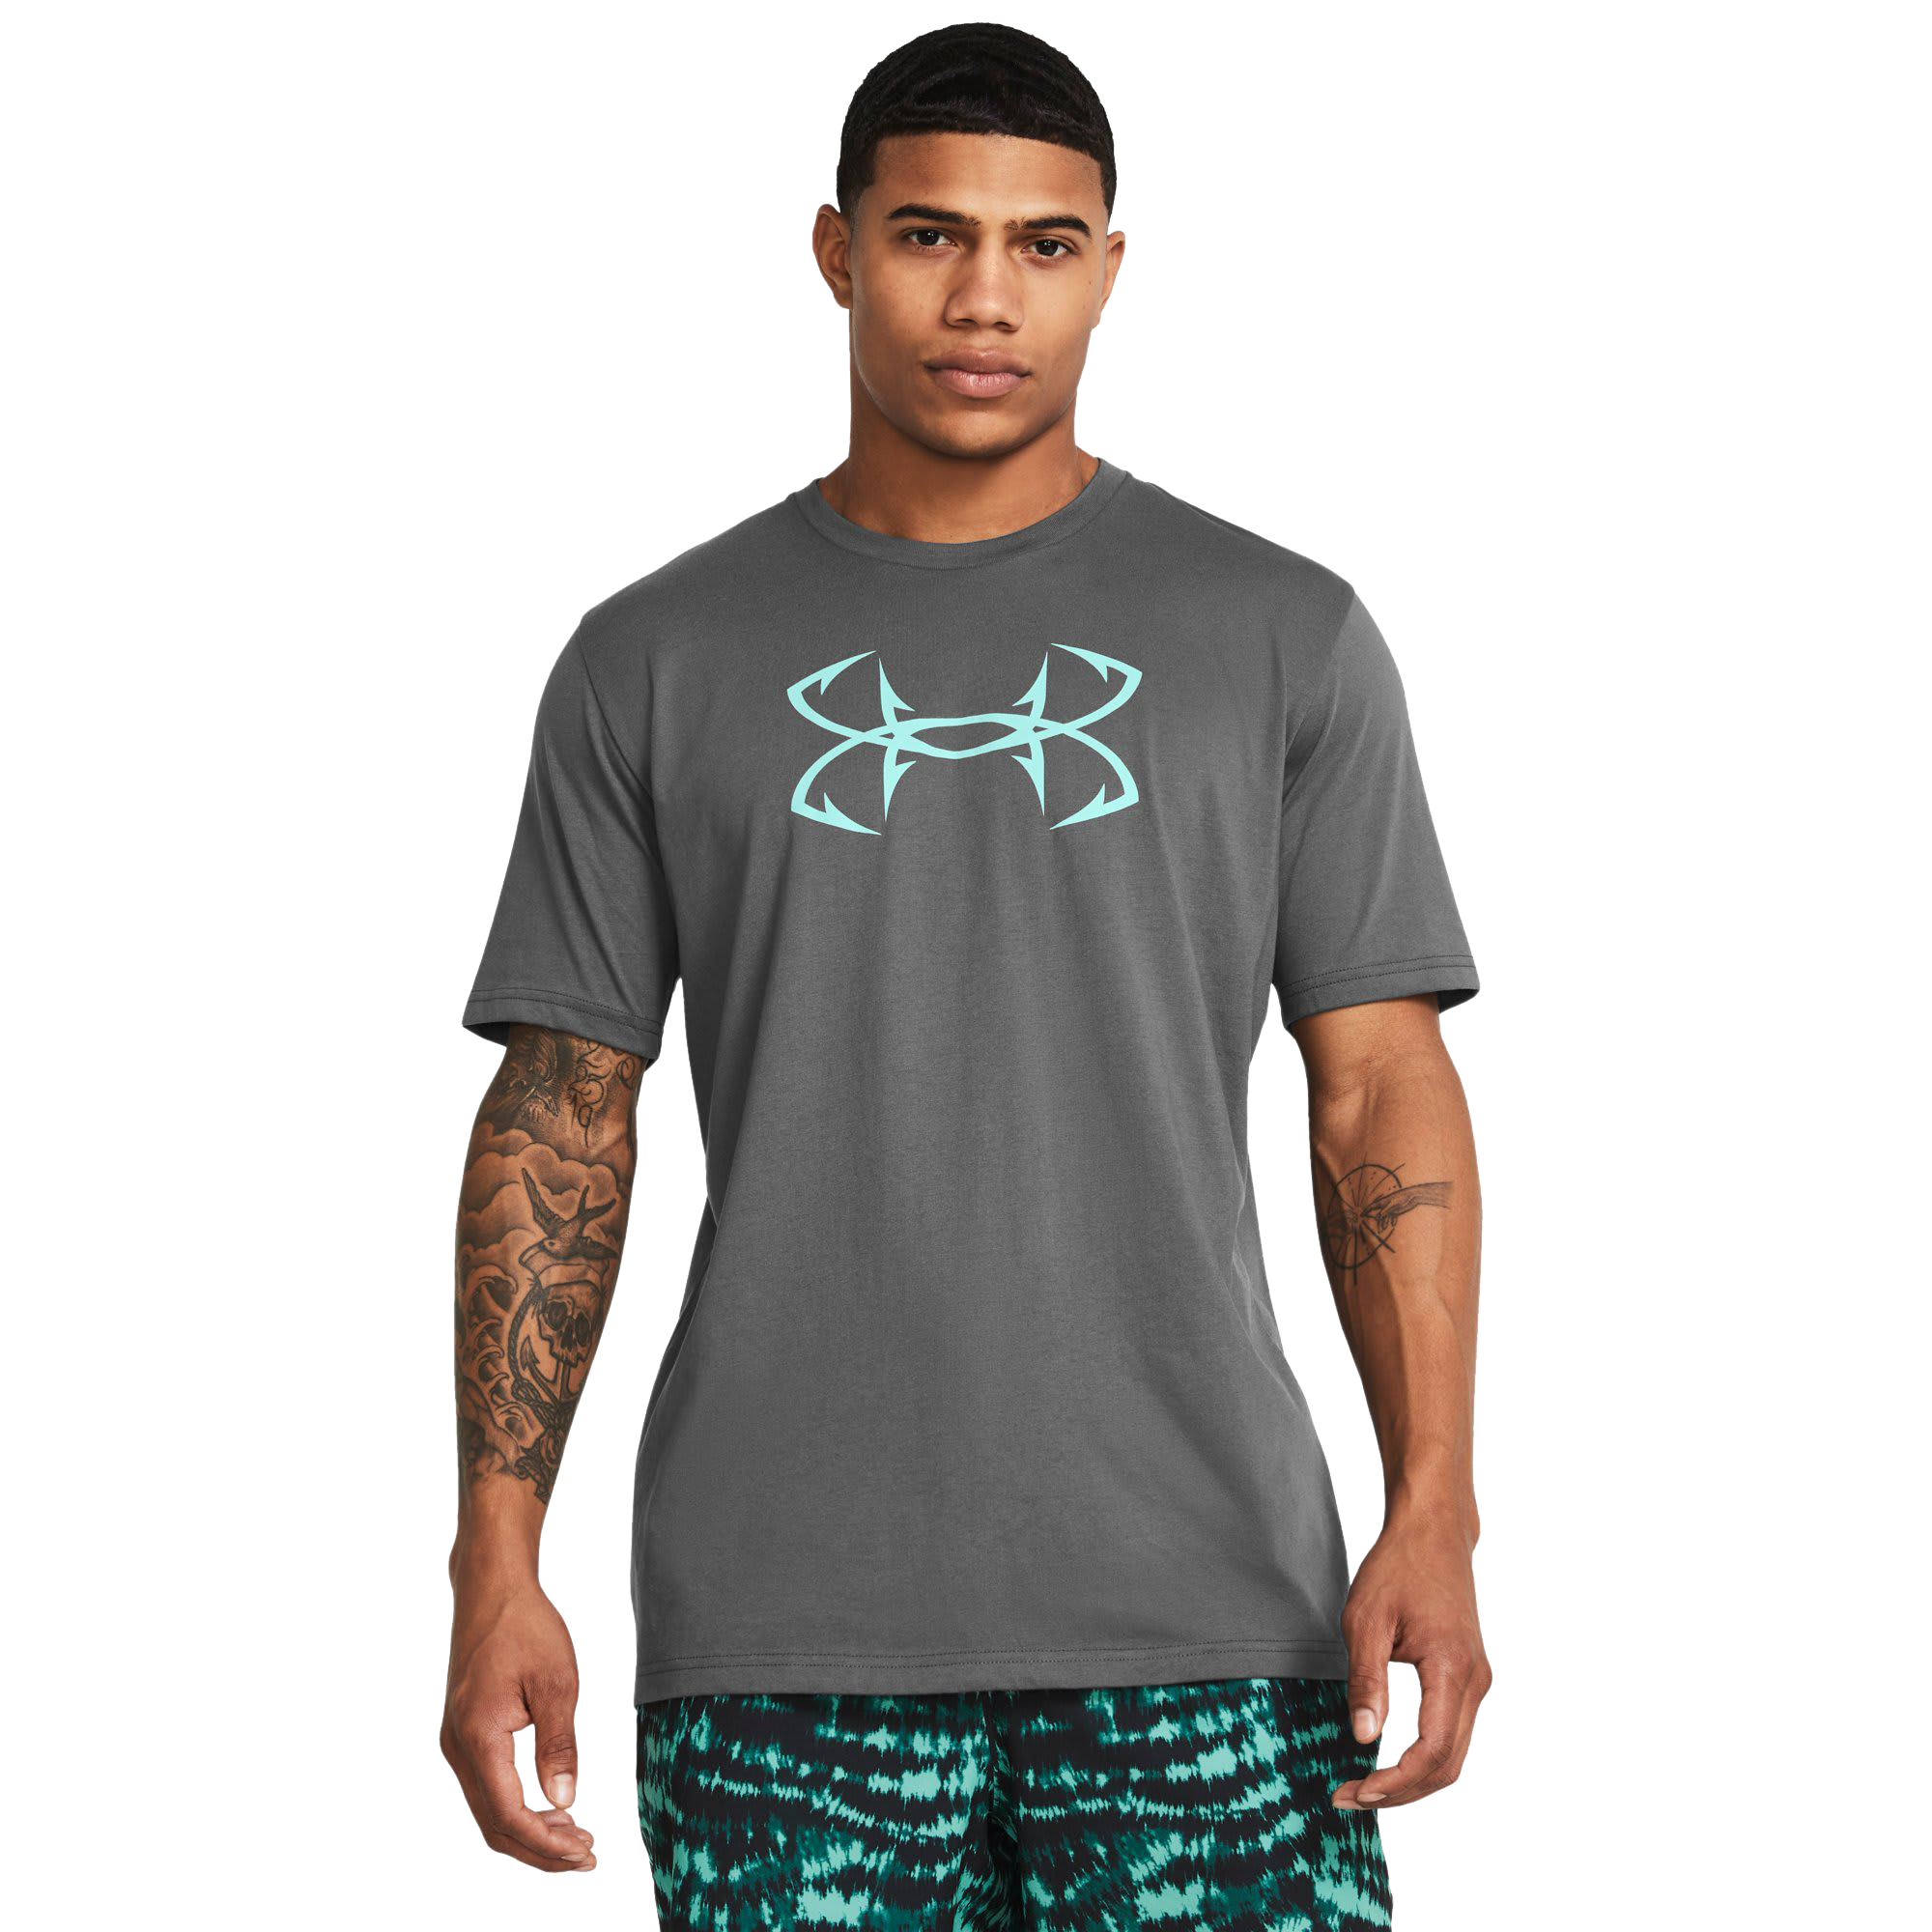 Under Armour FISH Bass Waterblur Short-Sleeve T-Shirt for Men